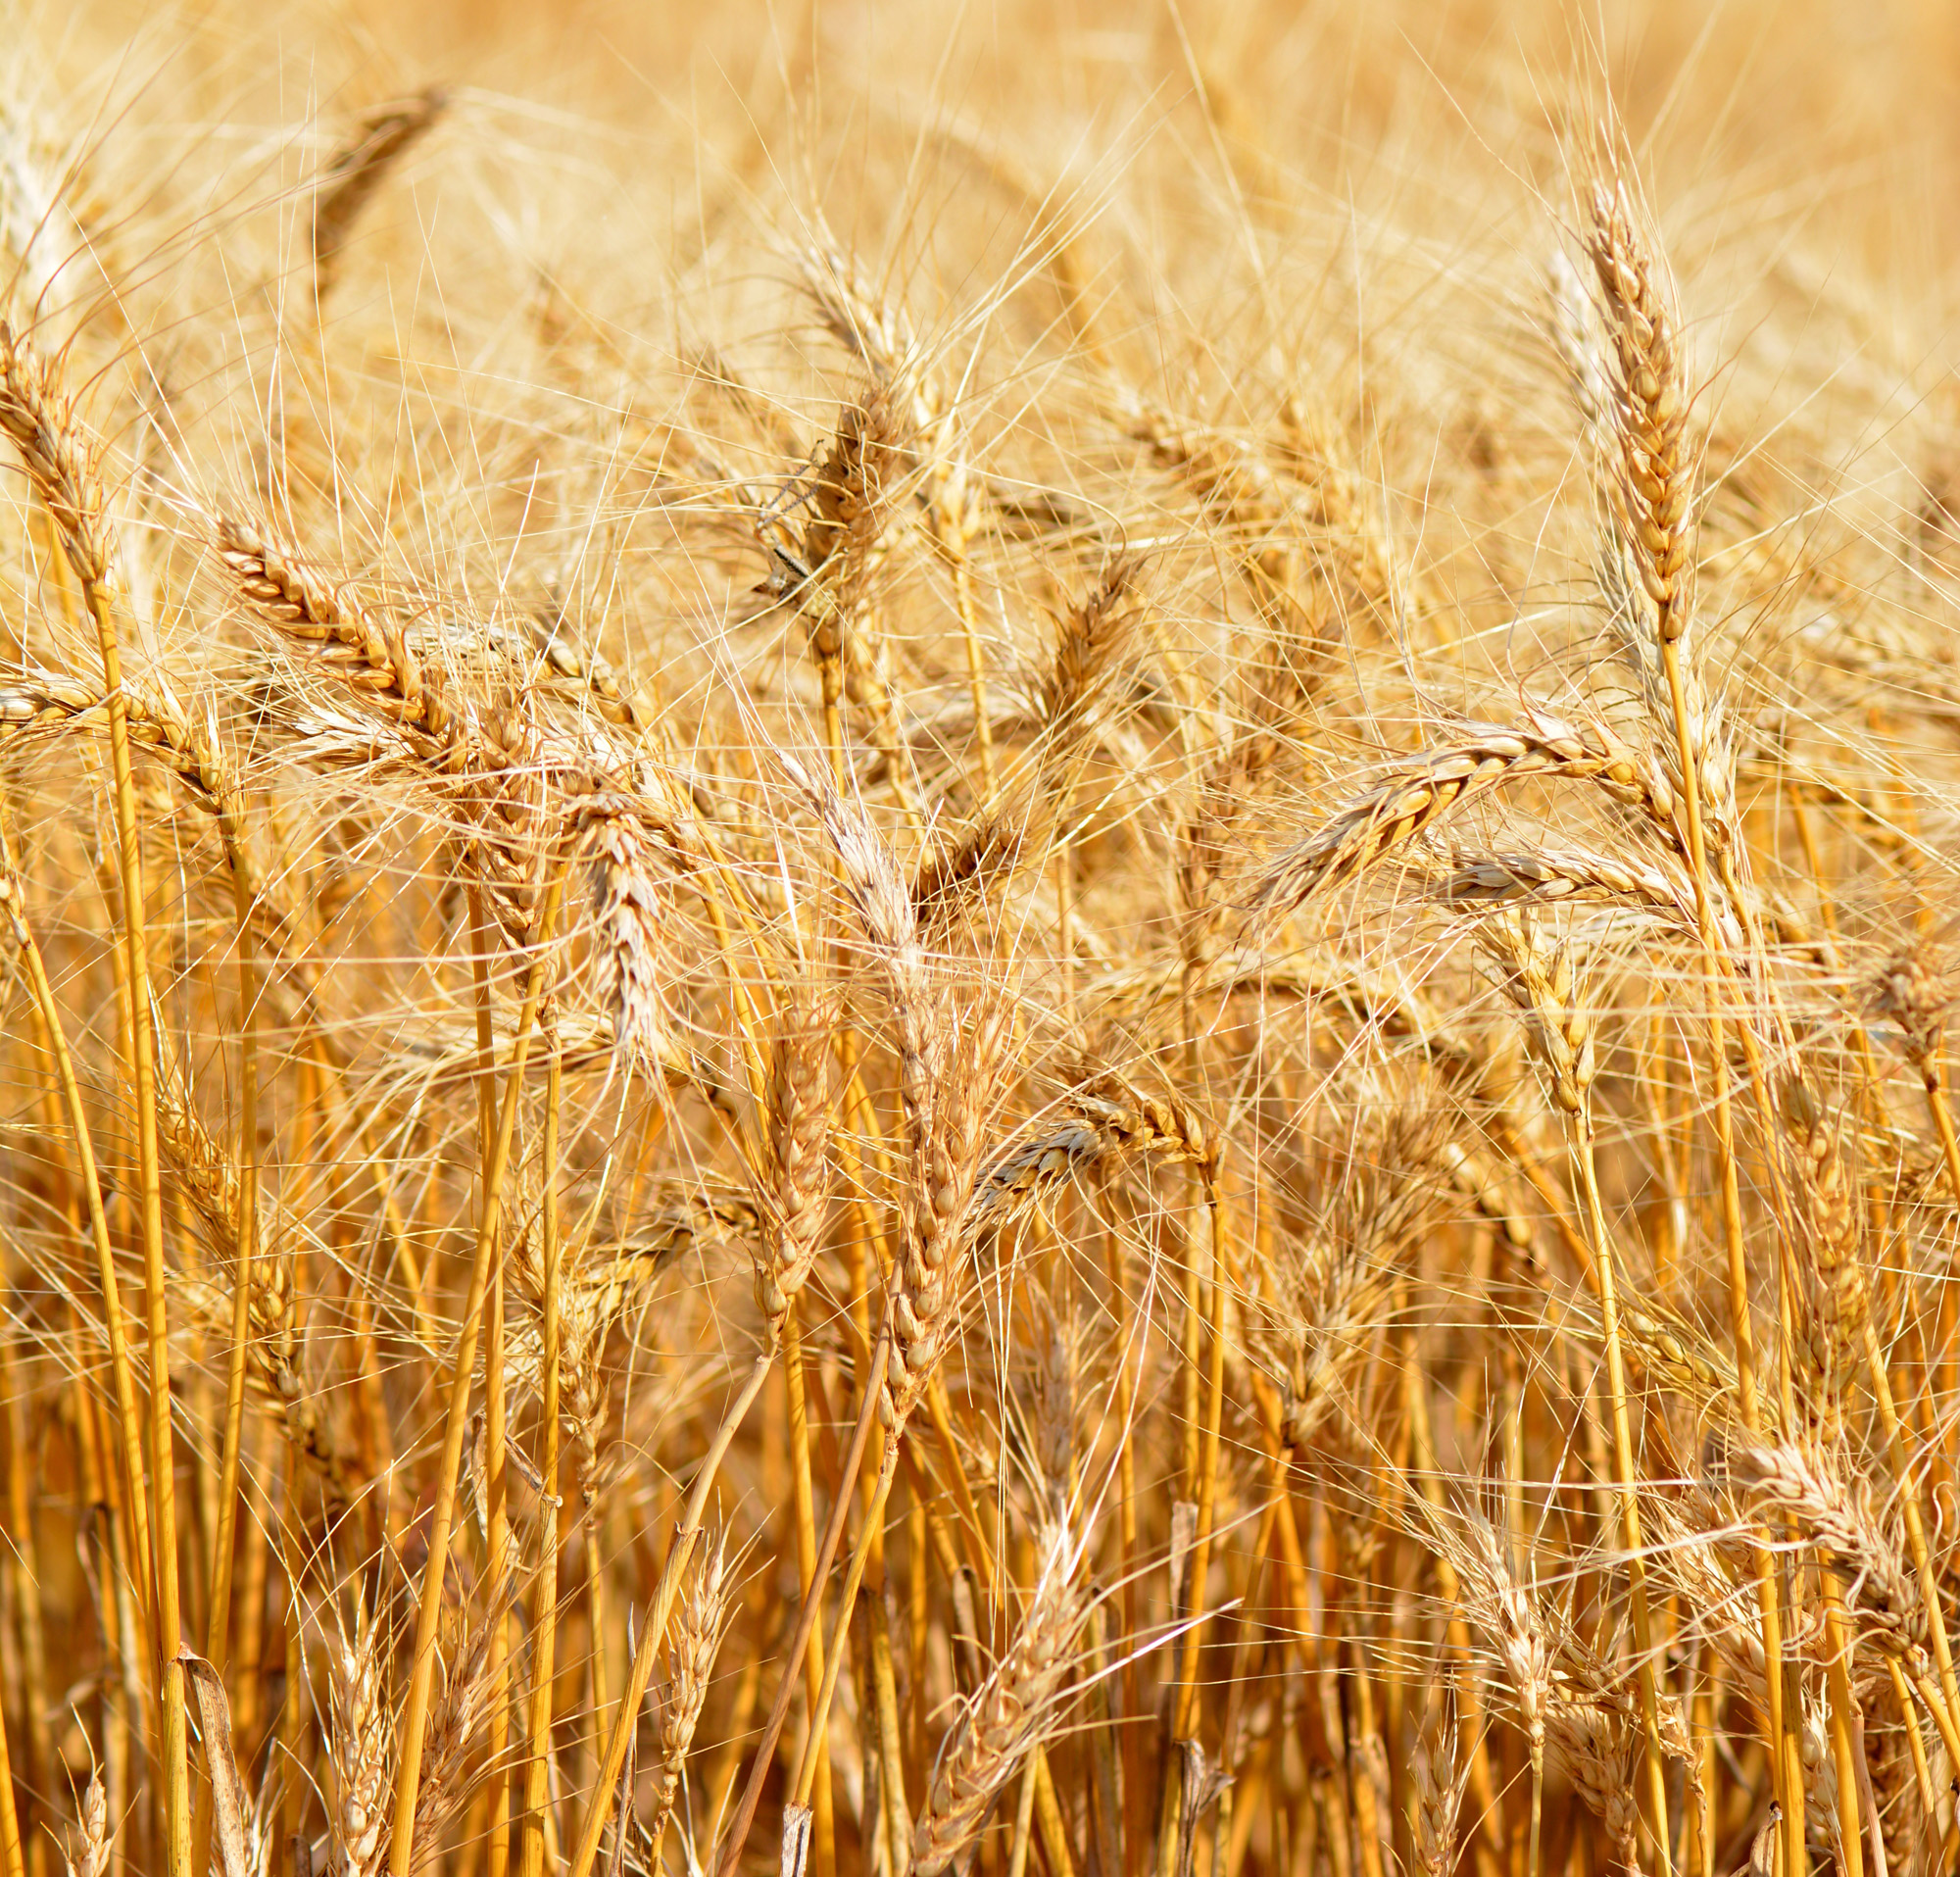 Wheat photos found on the web.